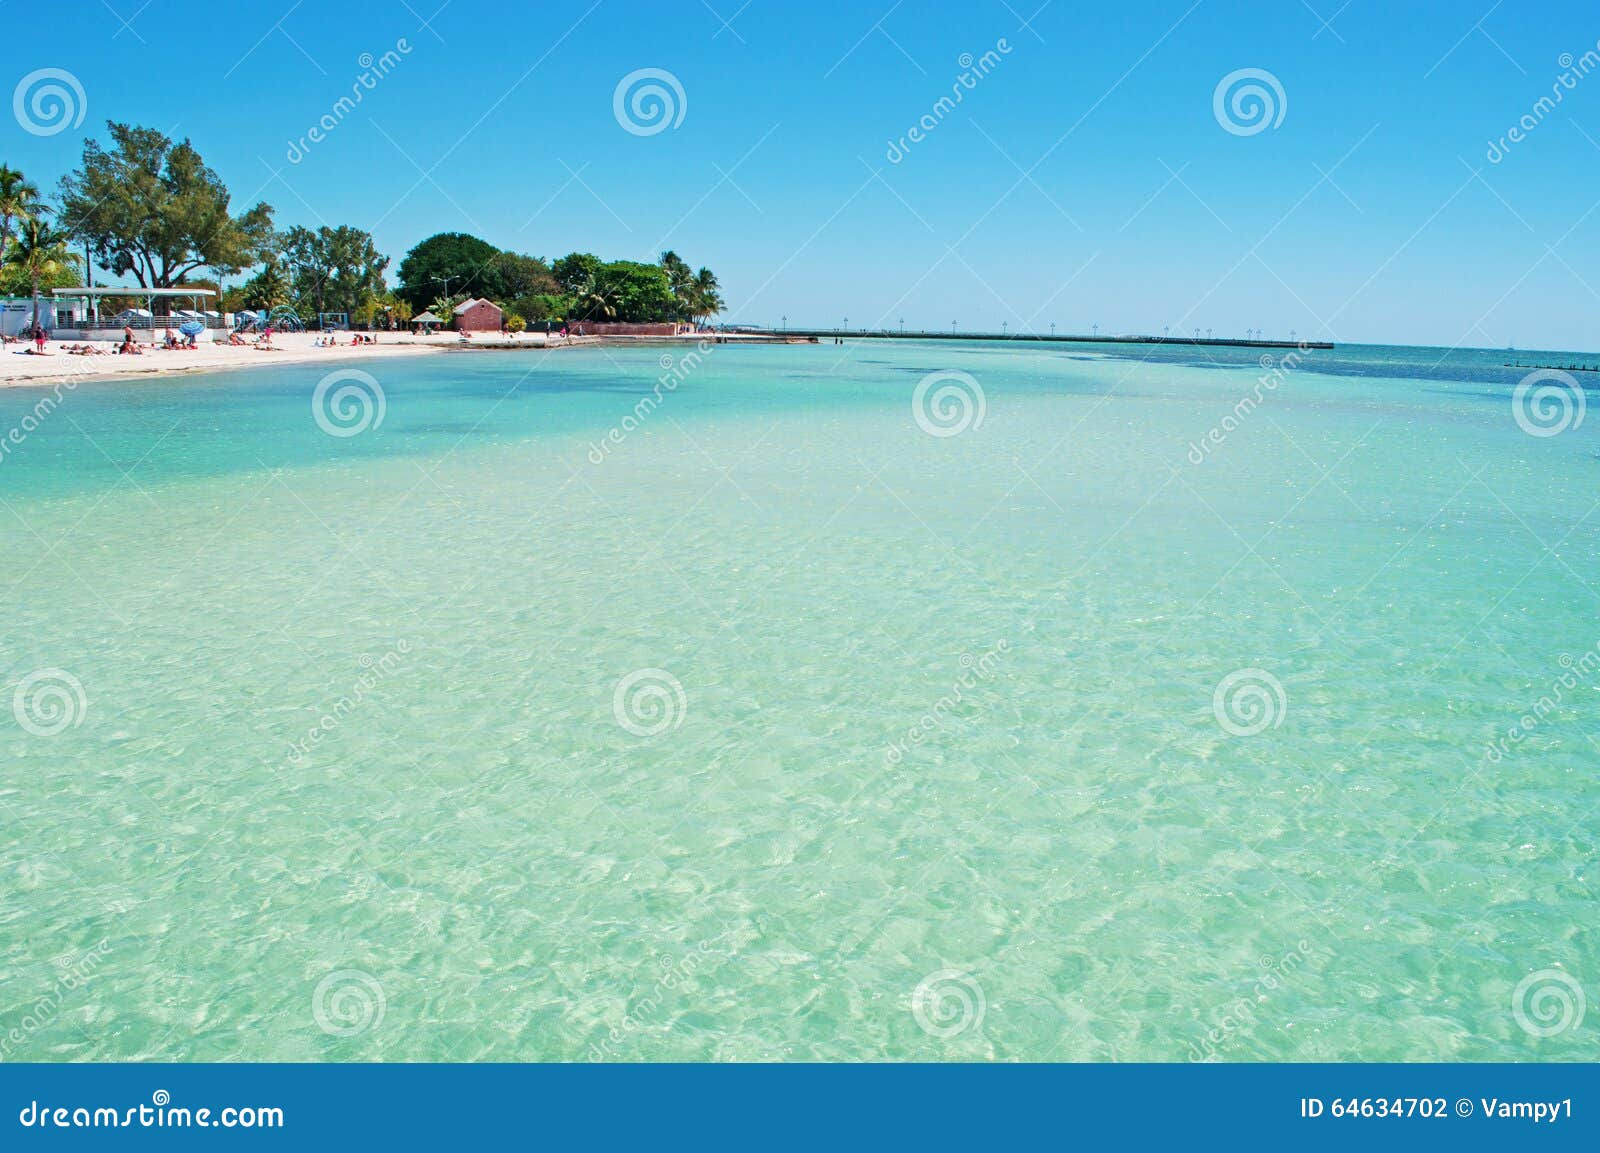 higgs beach pier, palms, relax, sea, key west, keys, cayo hueso, monroe county, island, florida